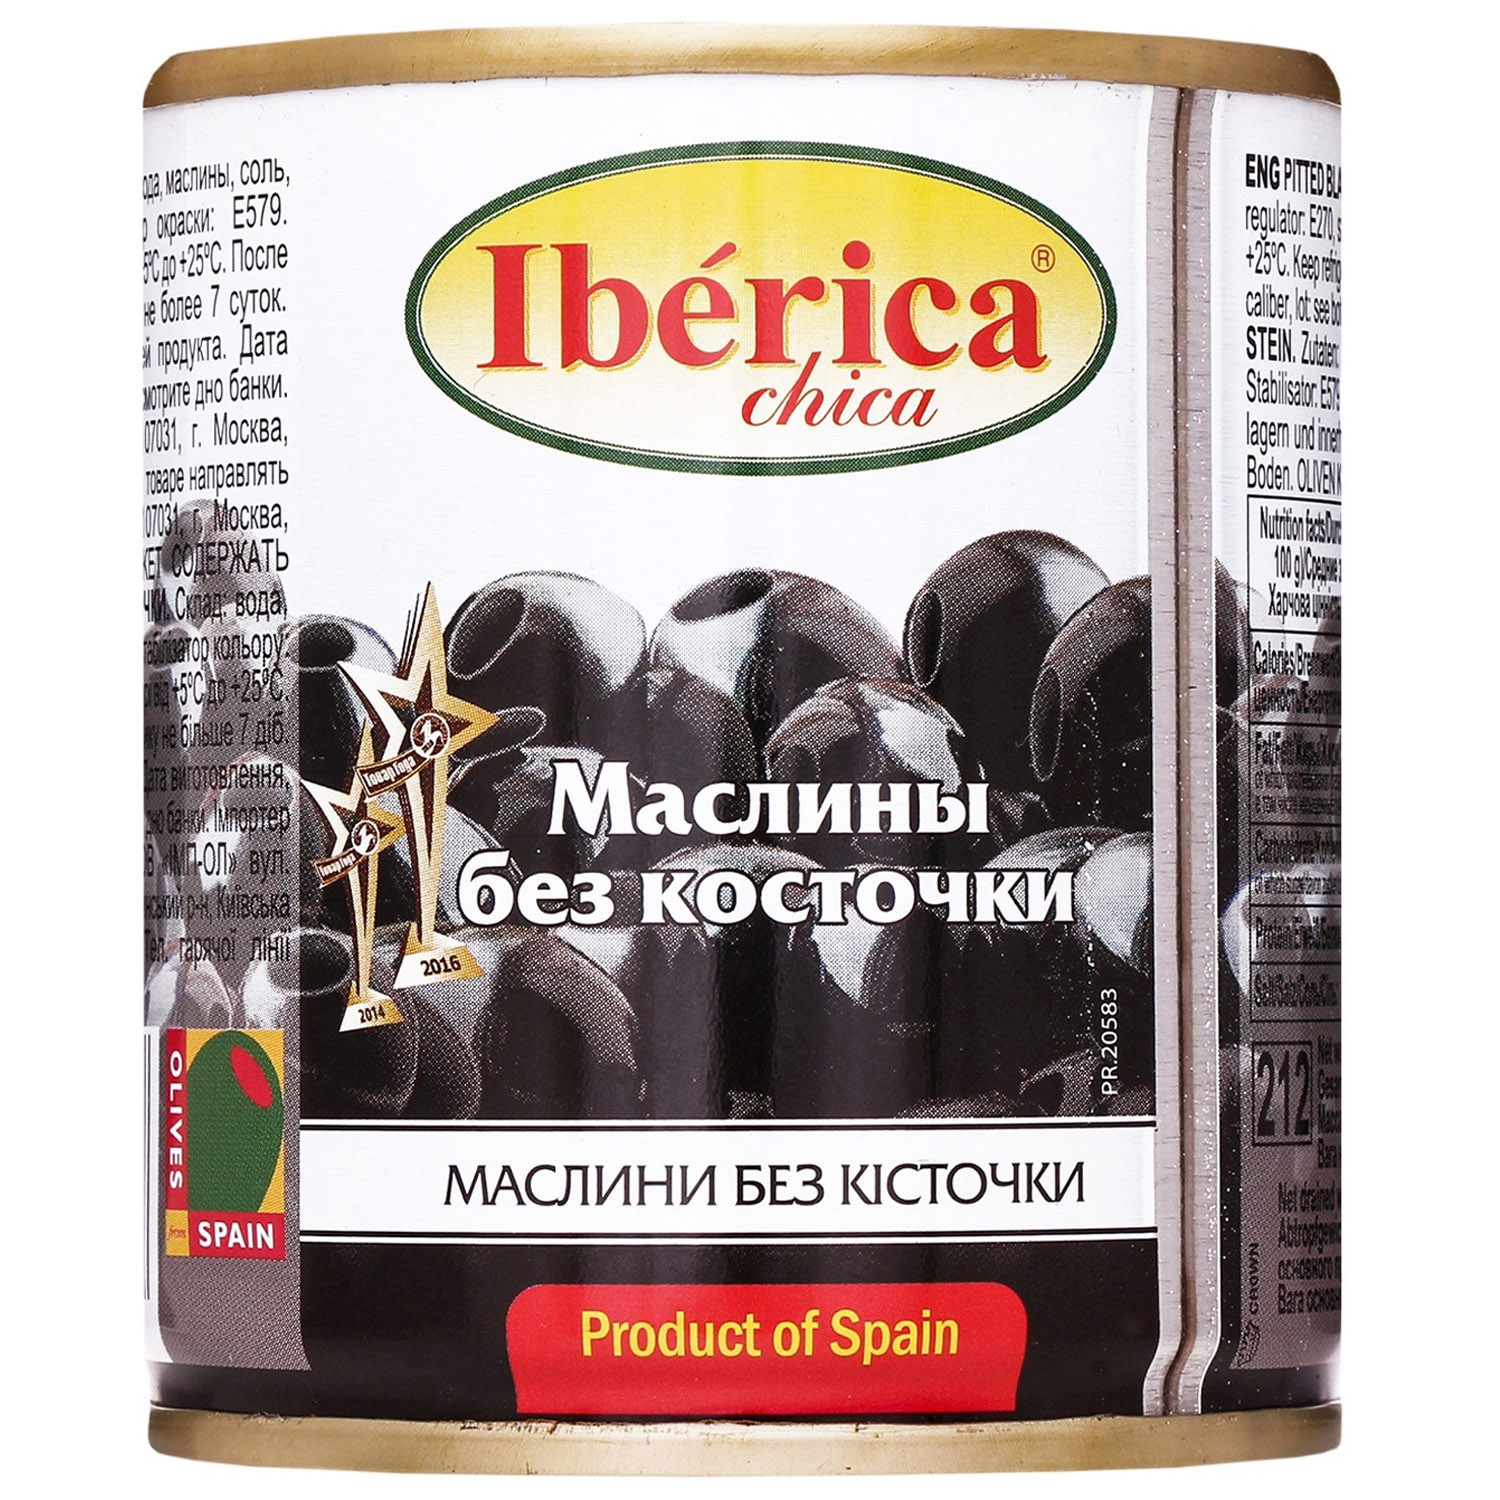 Маслини чорні Iberica Chica без кісточки 200 г (1349) - фото 1